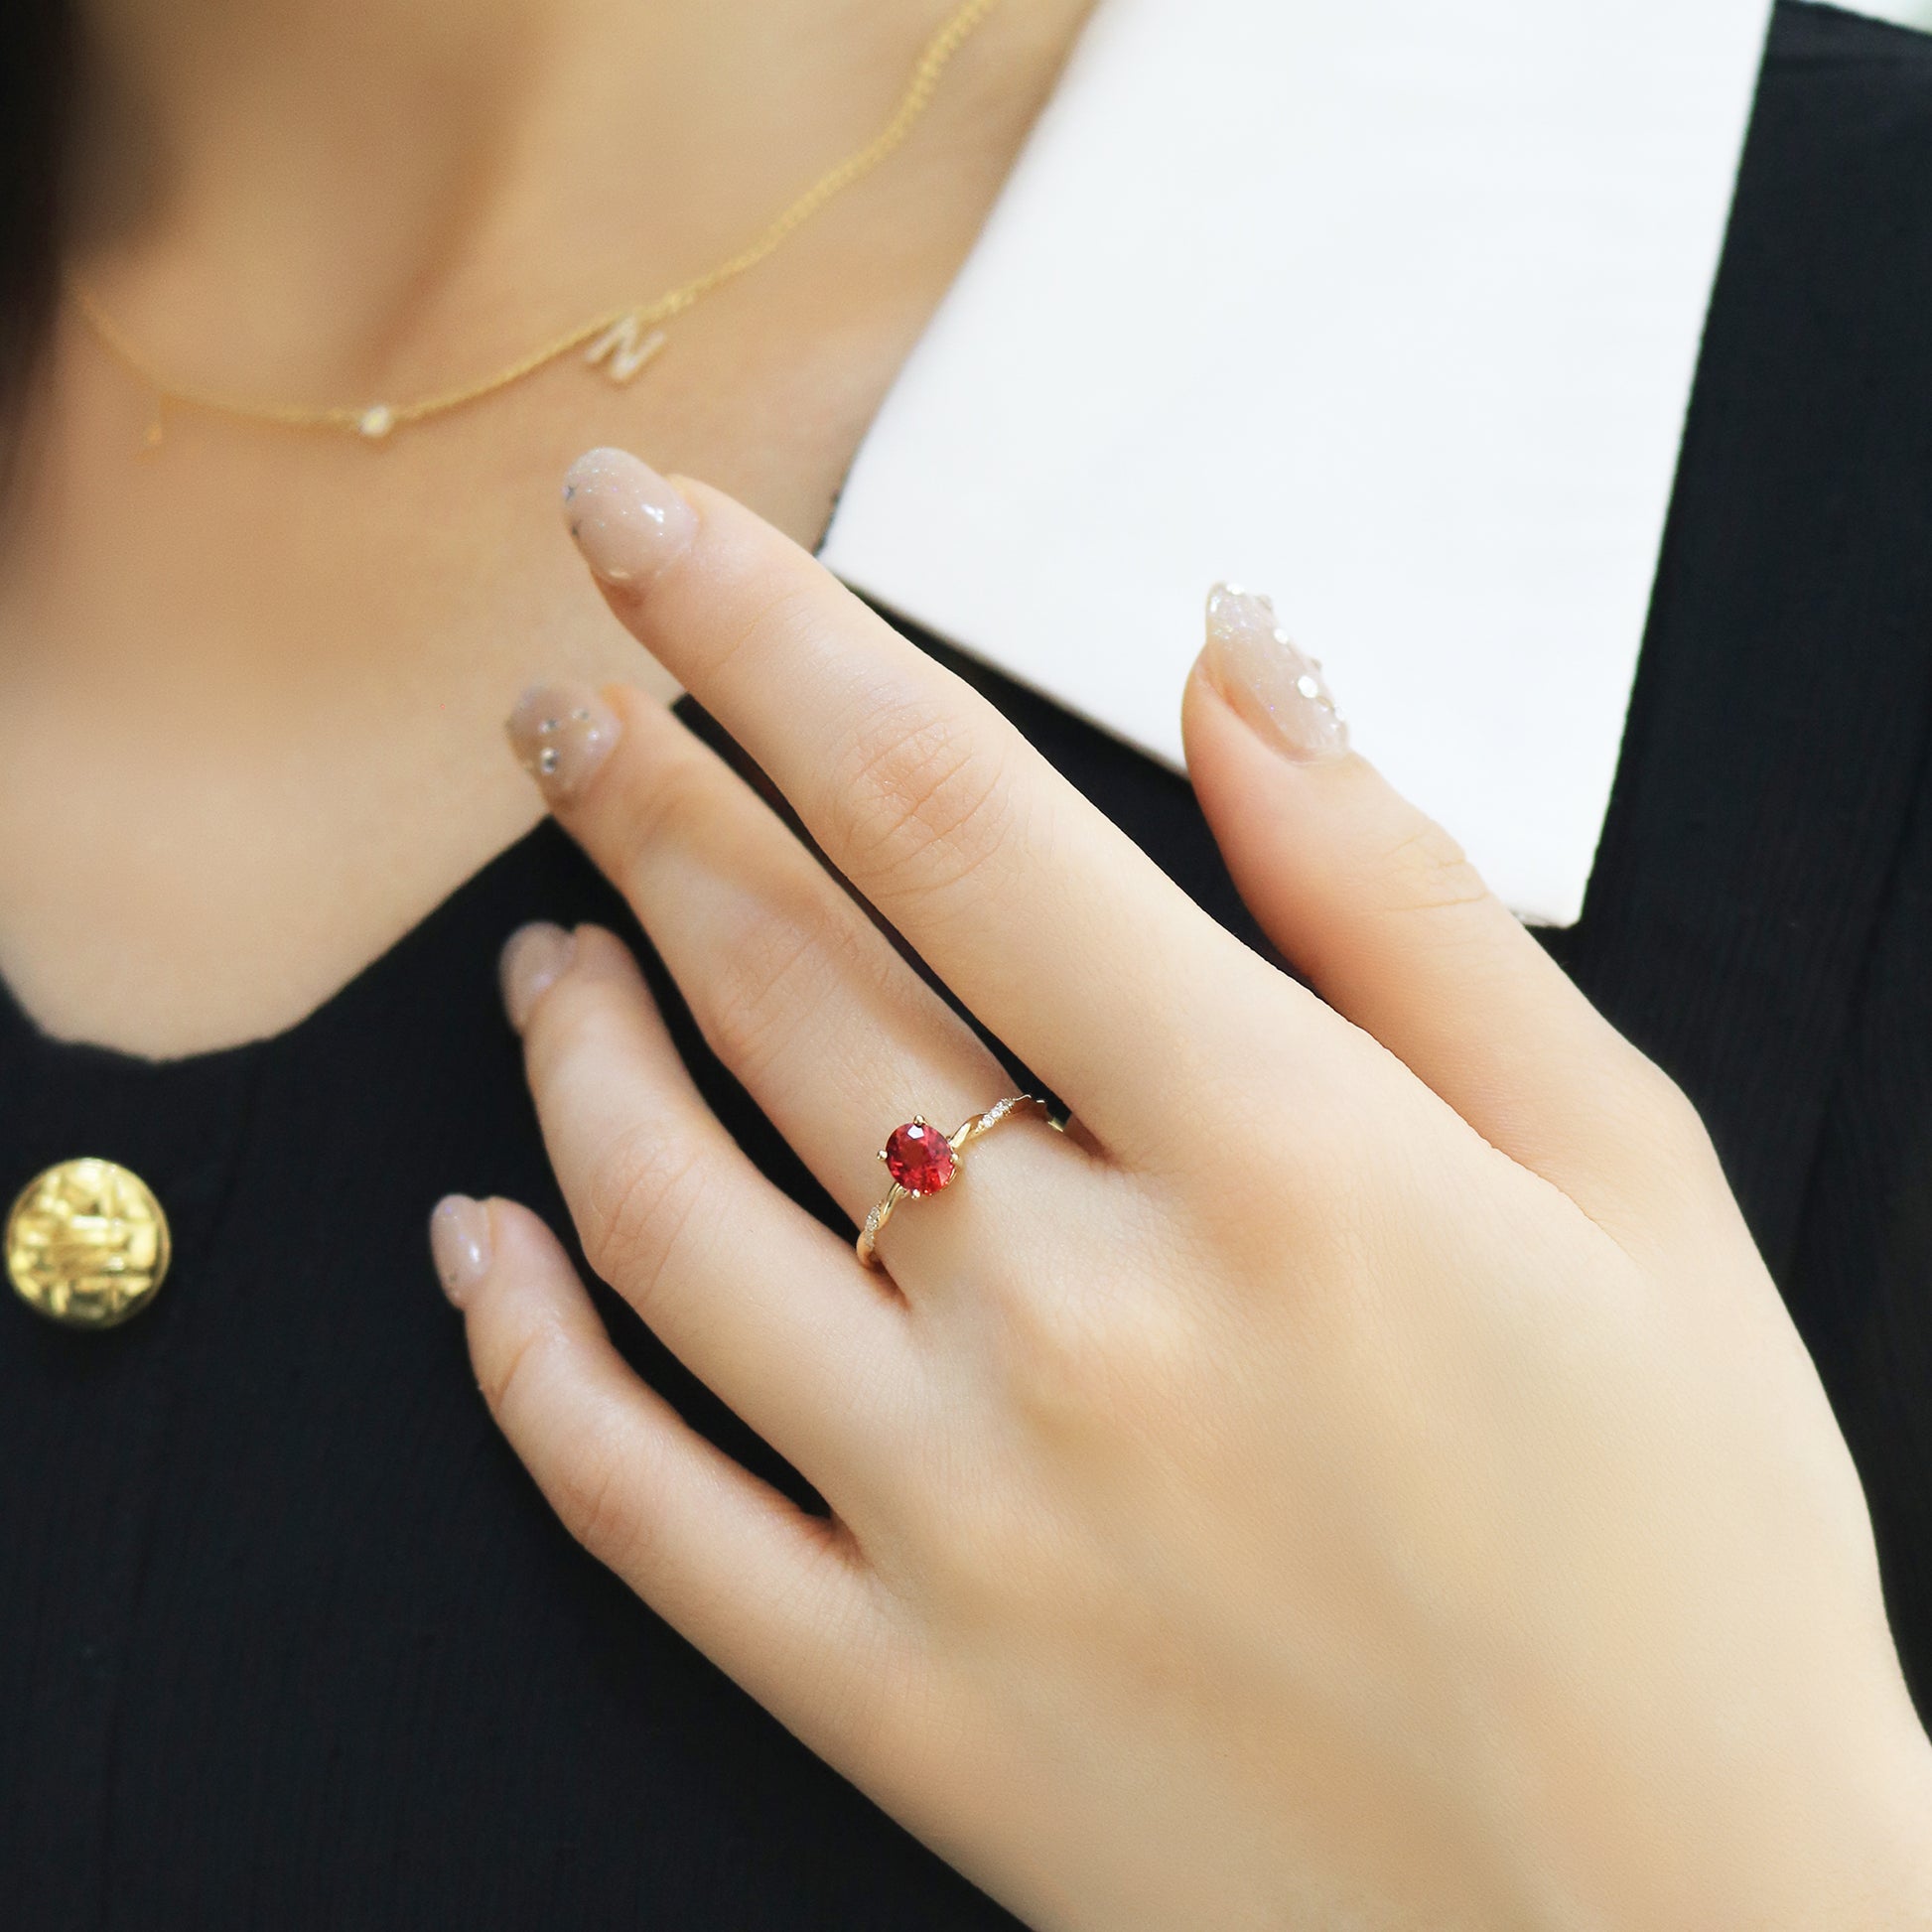 18k玫瑰金鑽石戒指在中指上 18k Rose Gold Twisted Orangey Red Sapphire Diamond Ring on middle finger